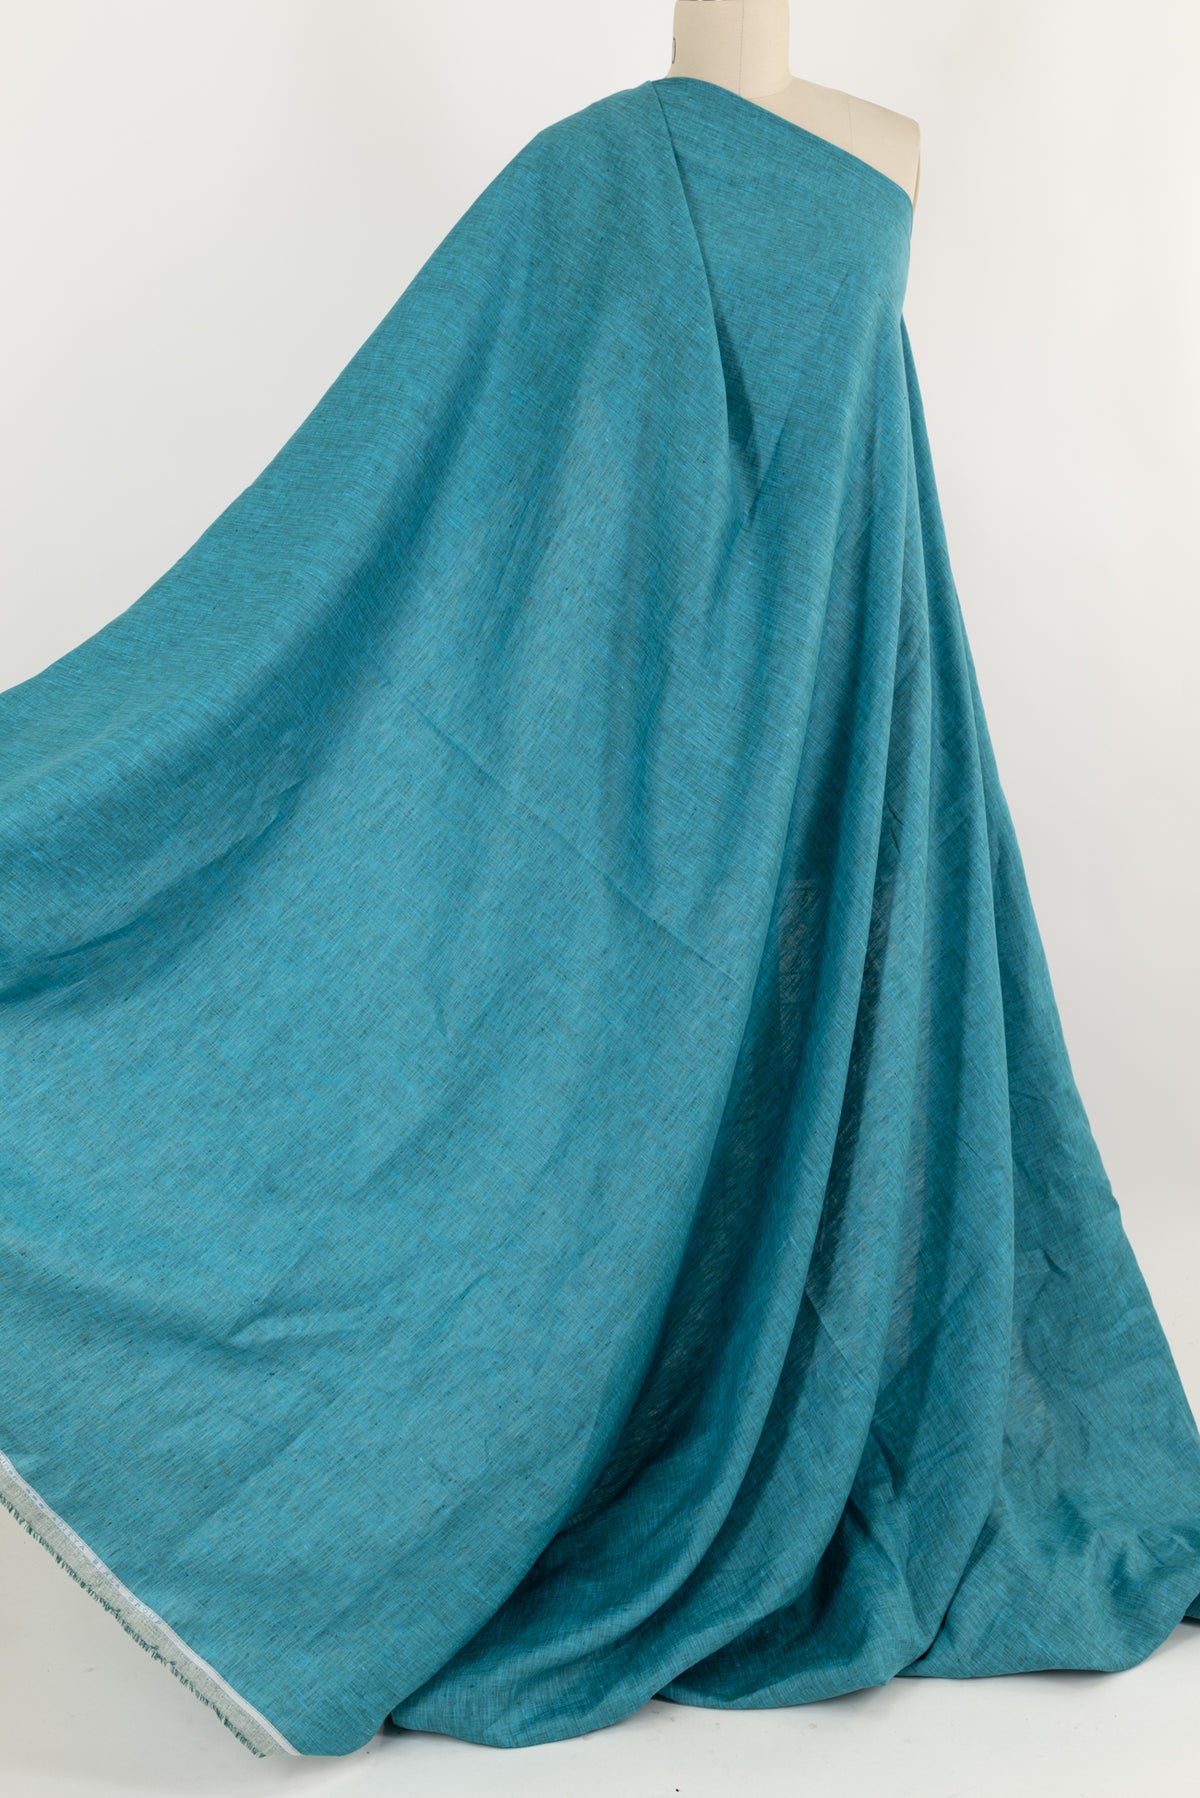 Lydia Teal Linen Woven - Marcy Tilton Fabrics